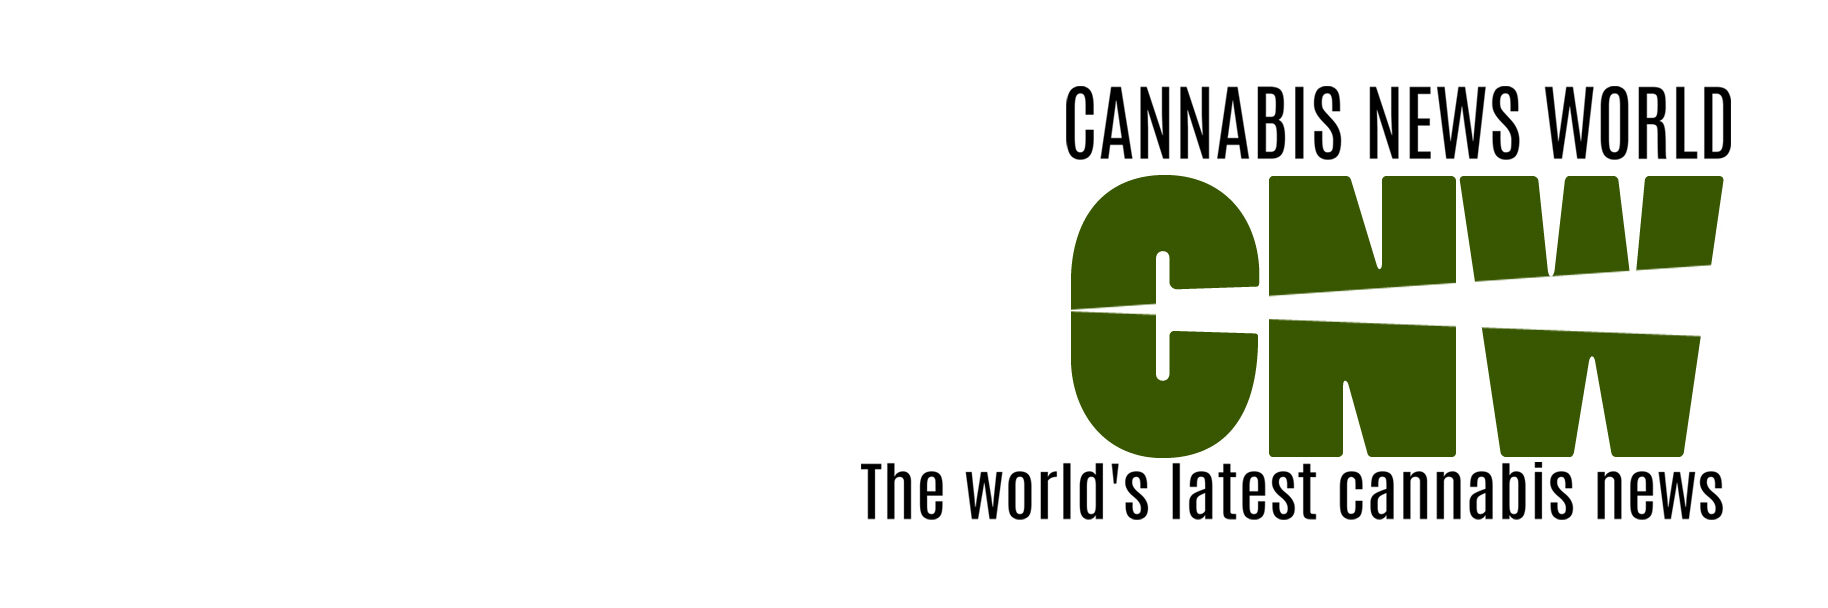 Cannabis News World